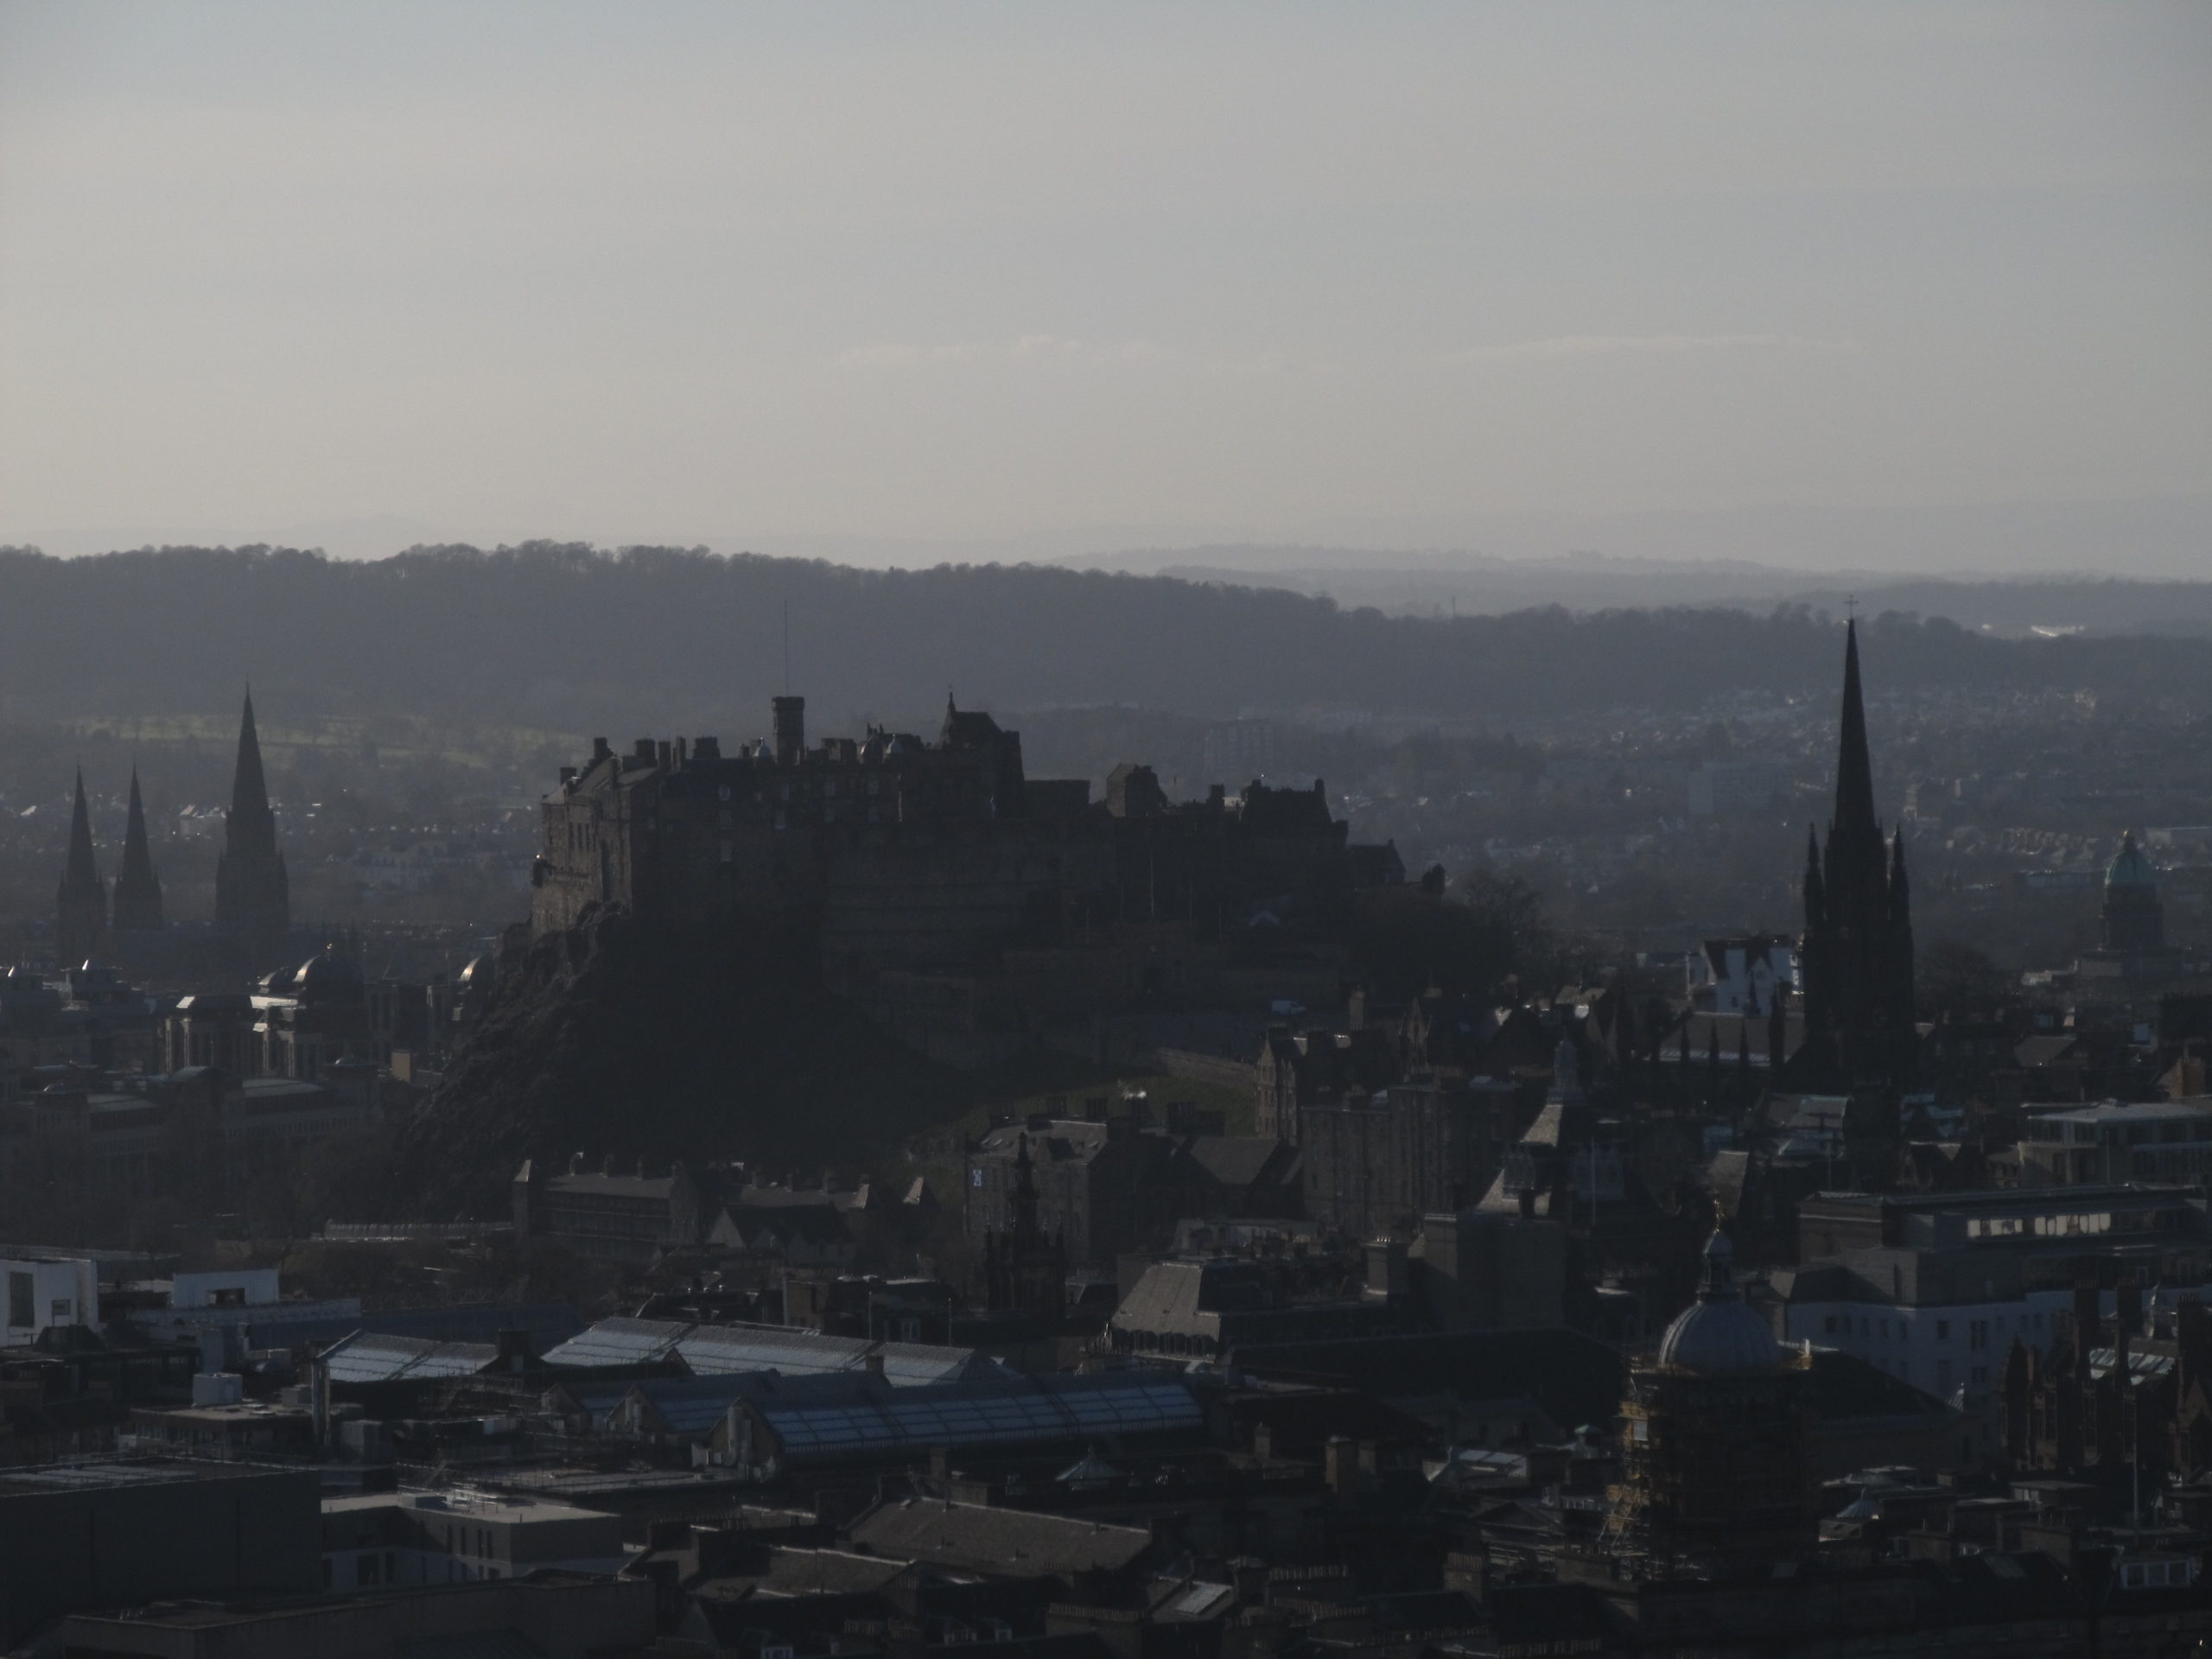 The Edinburgh Castle seen from the Arthur's Seat.